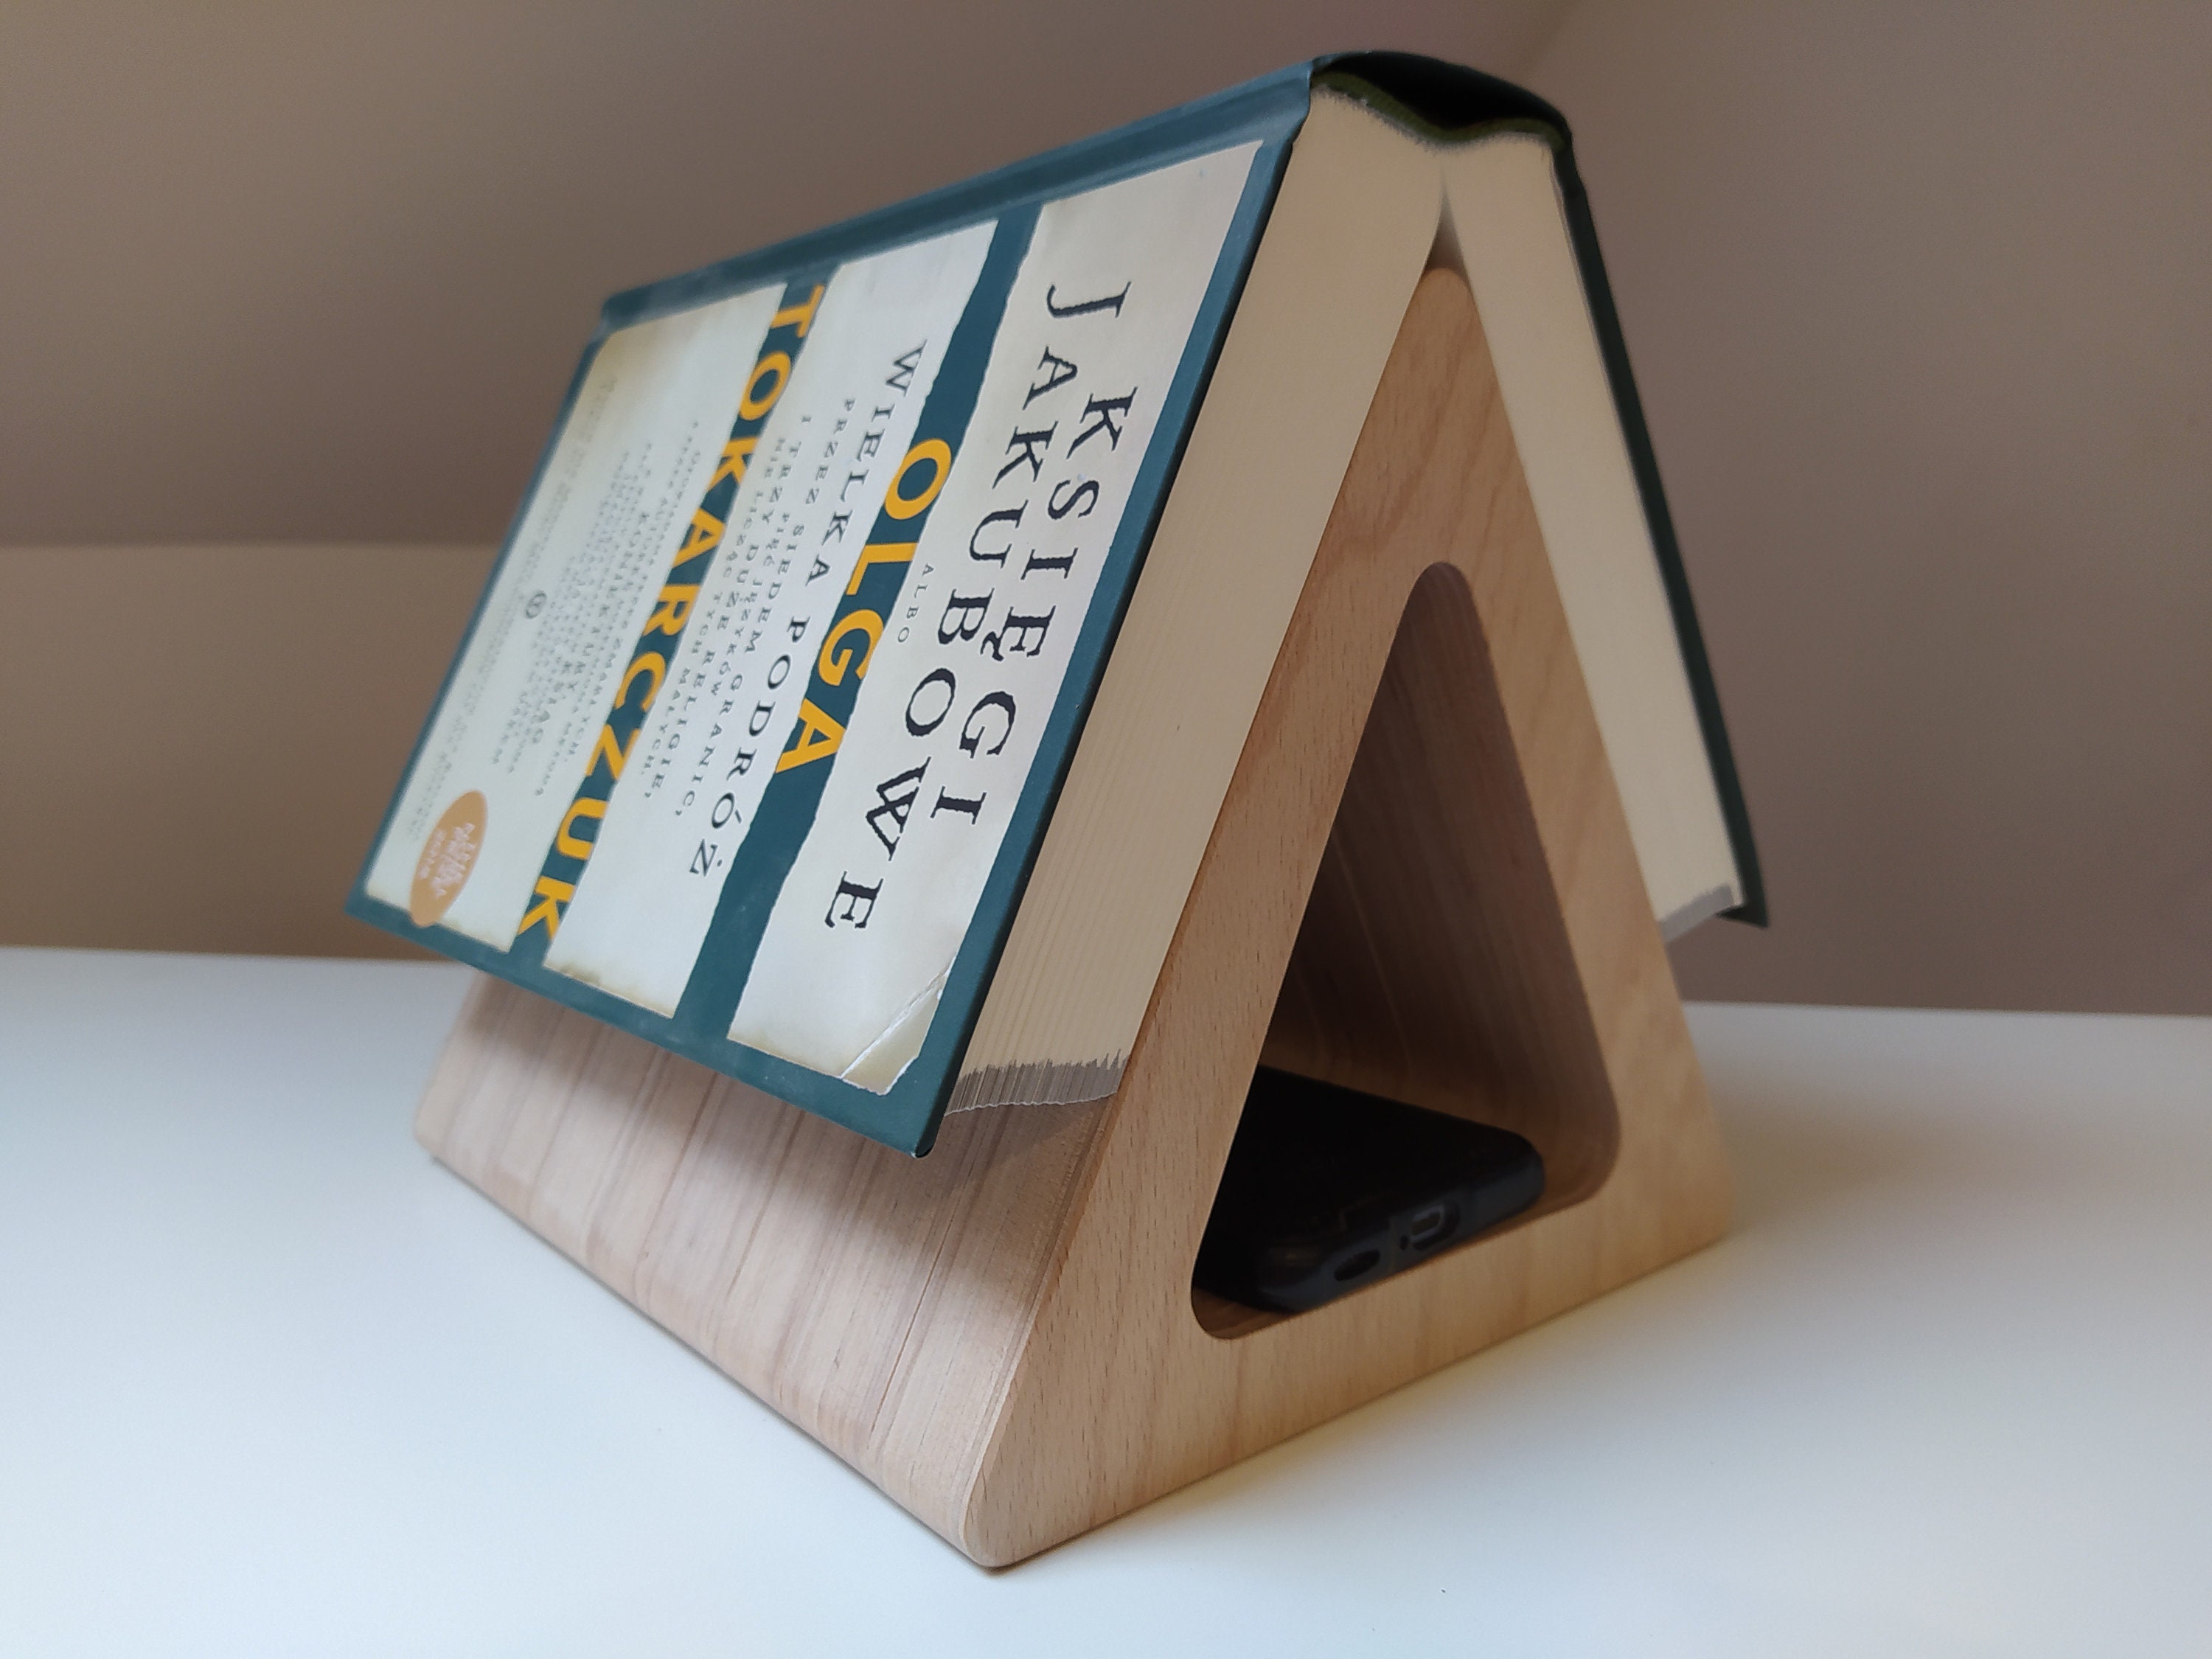 Egypt Book Nook/ Giza pyramidr Shelf Insert/ DIY Kit, book n - Inspire  Uplift